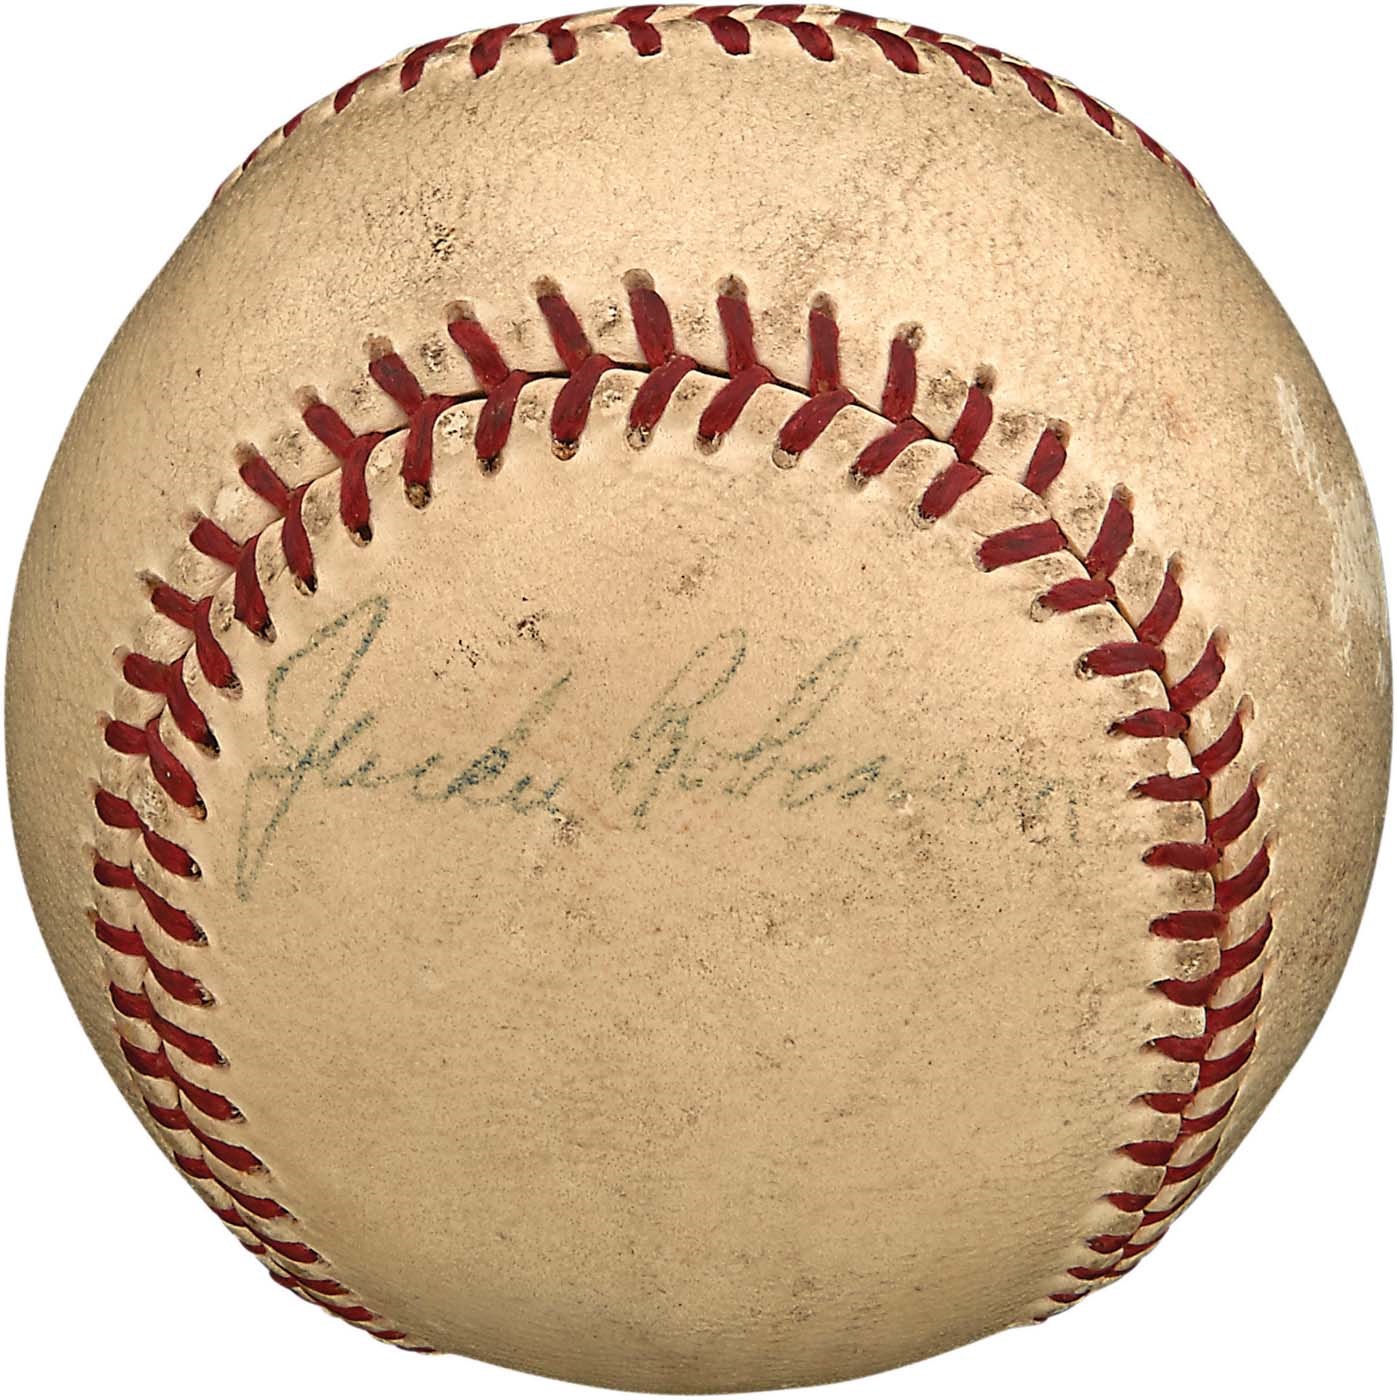 - 1950s Jackie Robinson All Stars Signed Baseball (PSA)